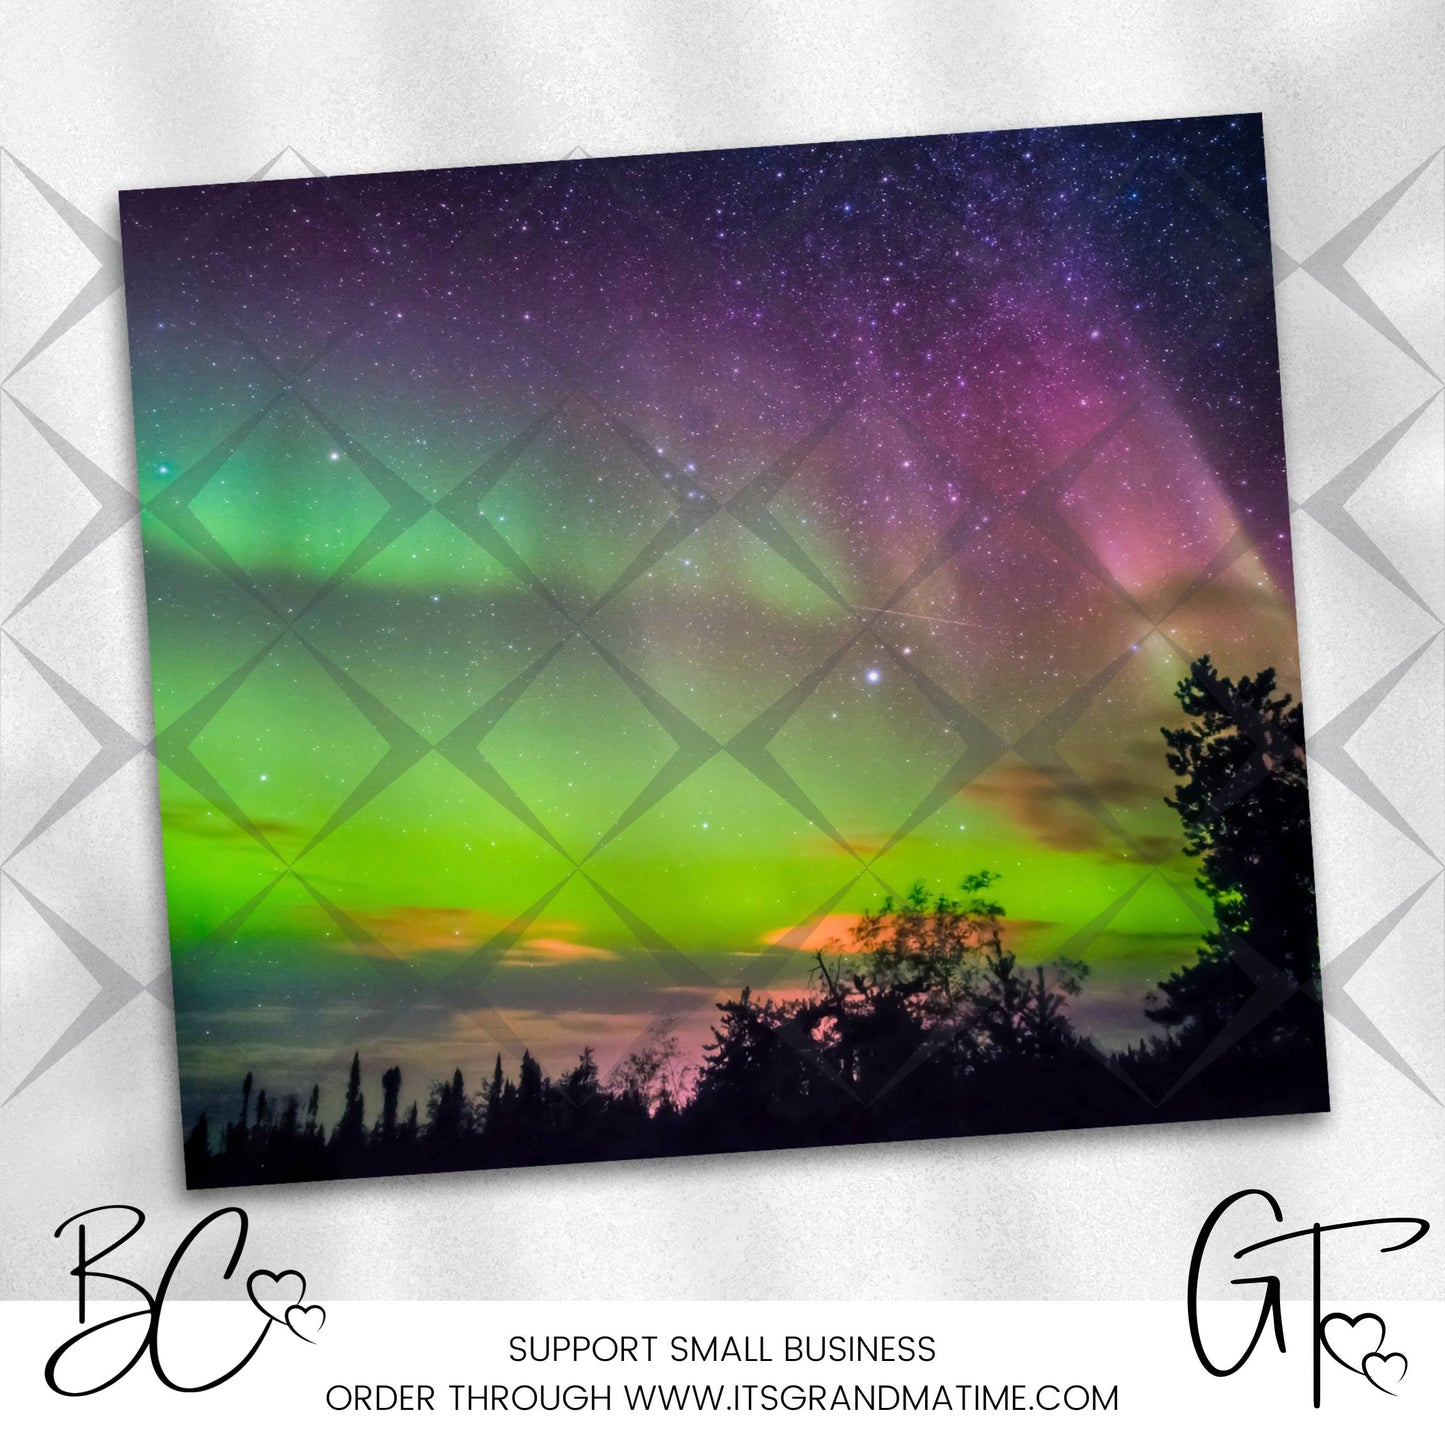 SUB464 Northern lights (aurora borealis) Camping Tumbler Sublimation Transfer